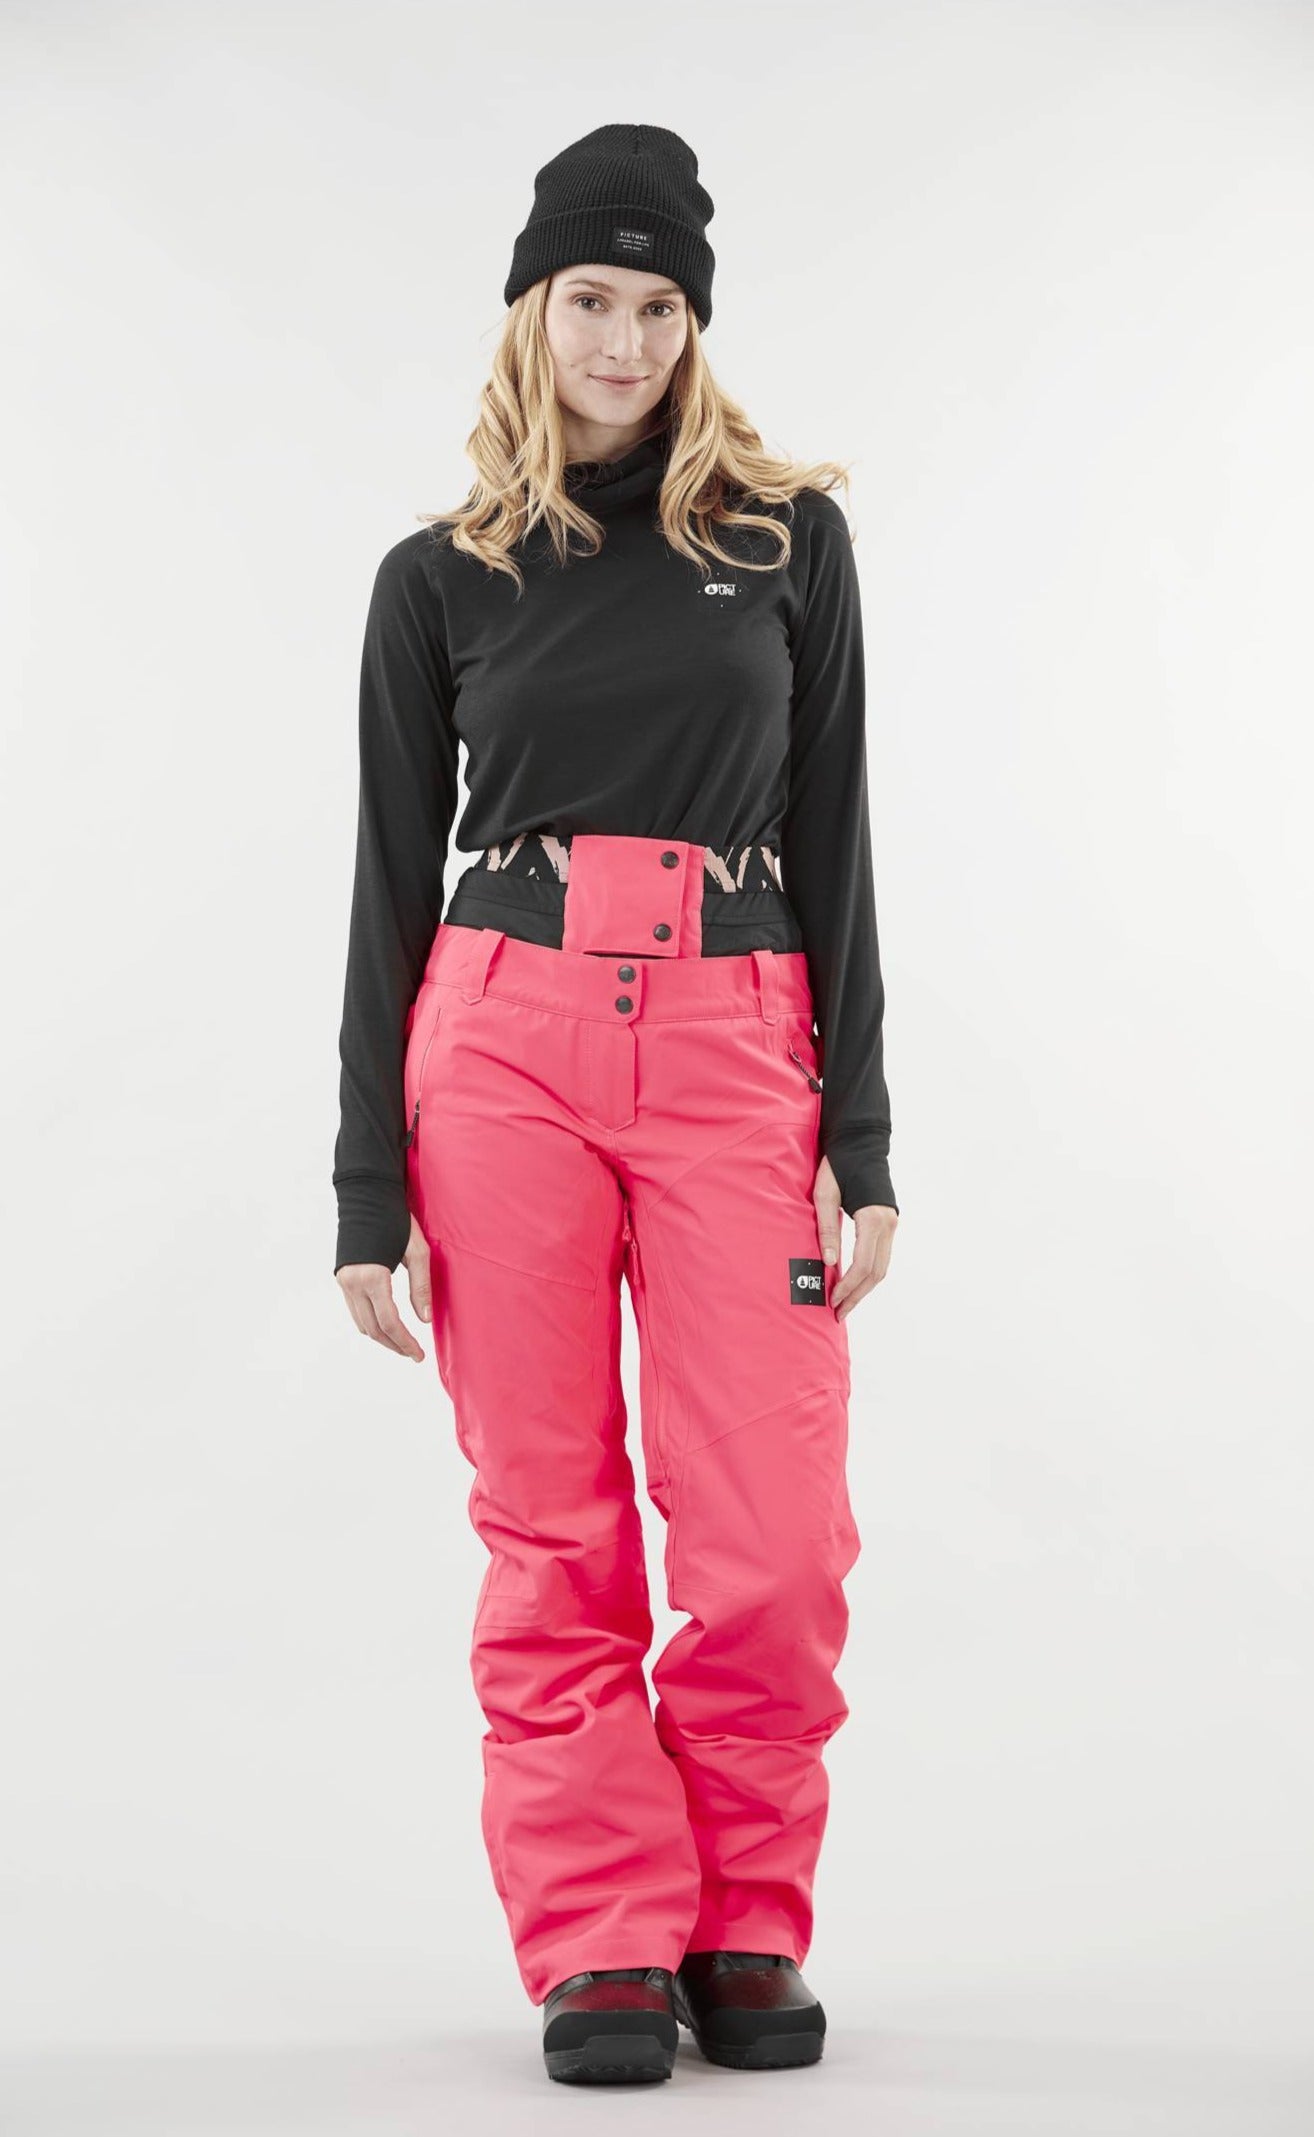 Salomon S/Max Warm Ski Pants - Women's